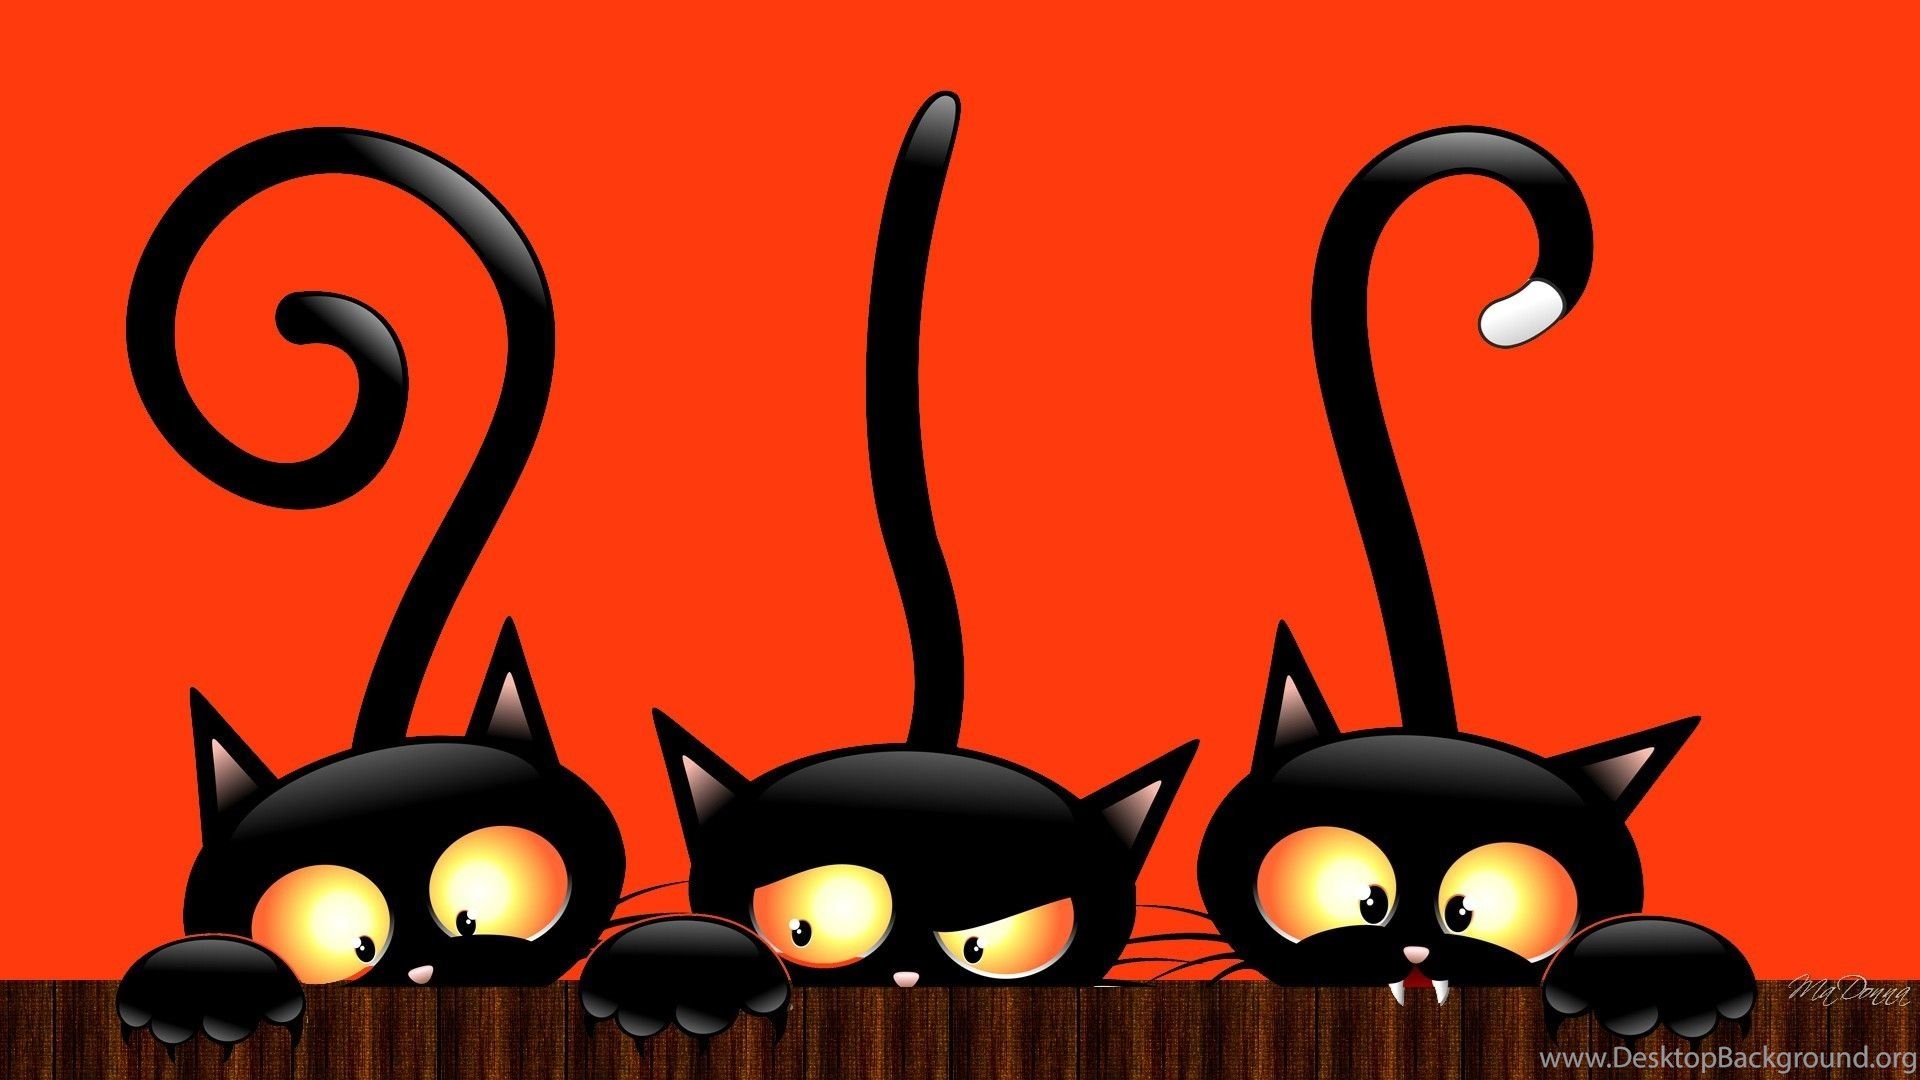 Cats: Black Cat Halloween Peeking Cute Bright Hallows Eve Orange. Desktop Background